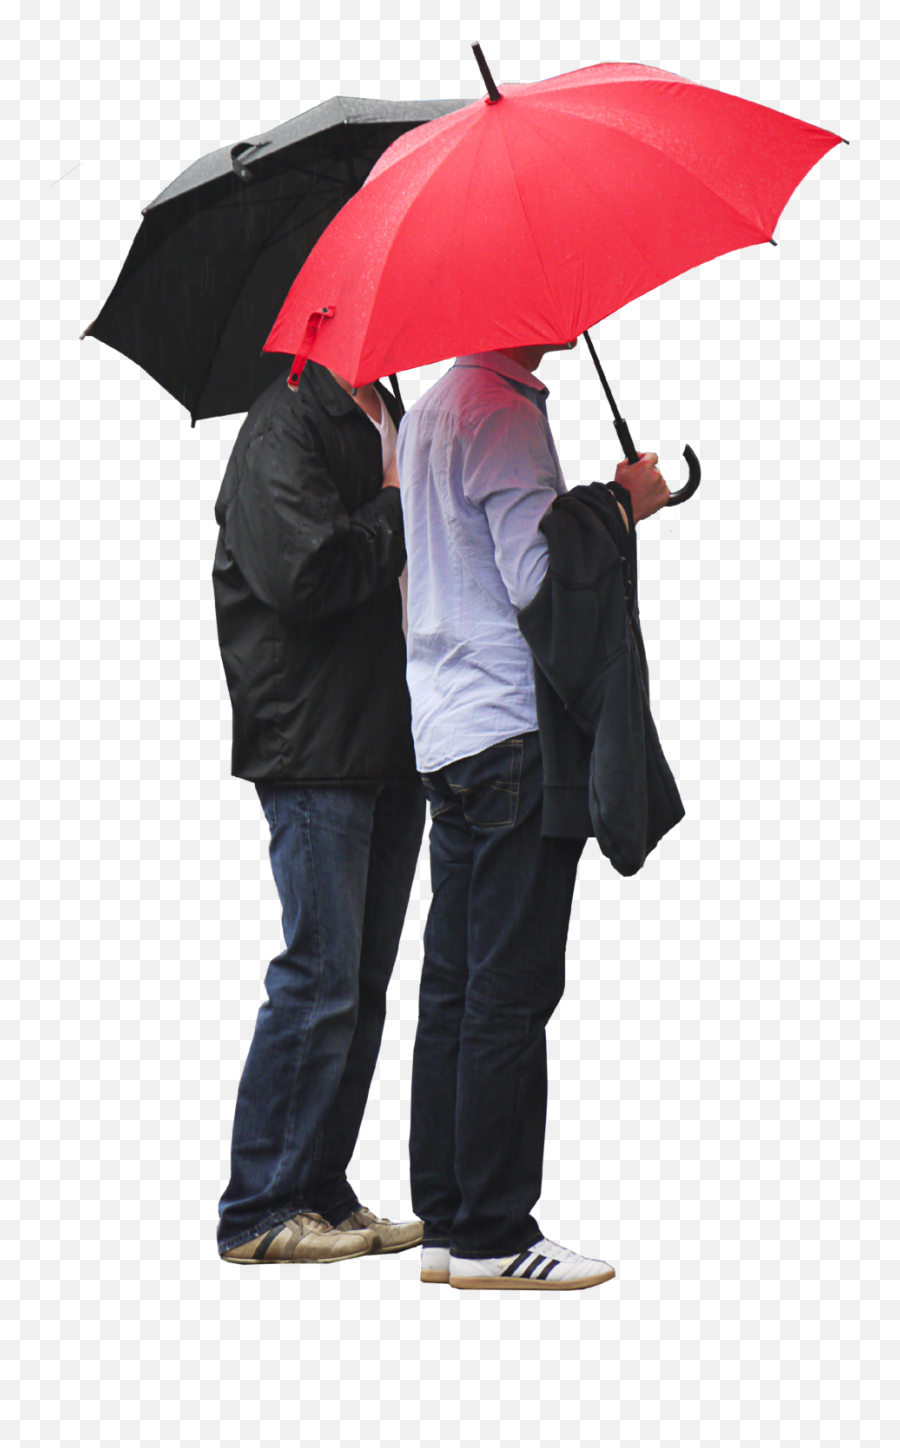 People With Umbrellas Emoji,Umbrella Png